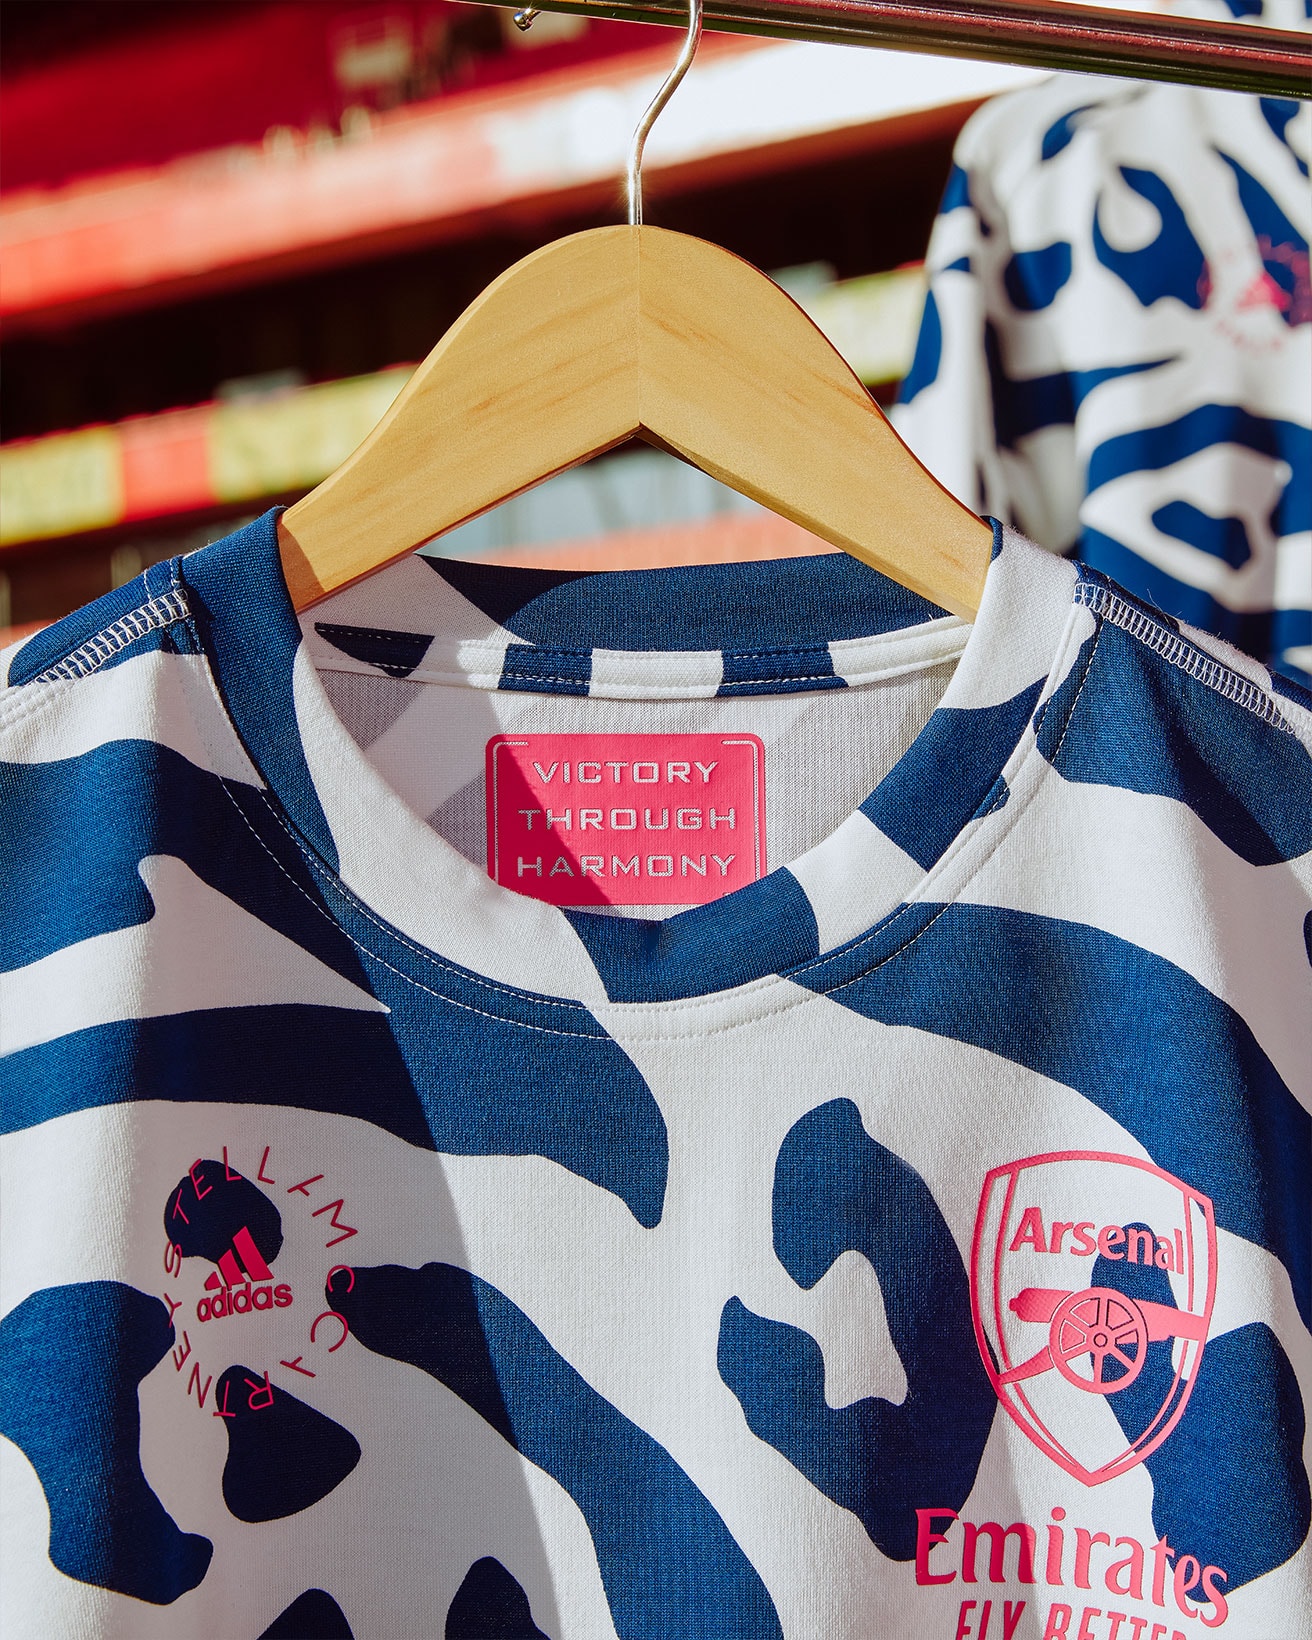 Stella McCartney designs jerseys for Arsenal Women's FC